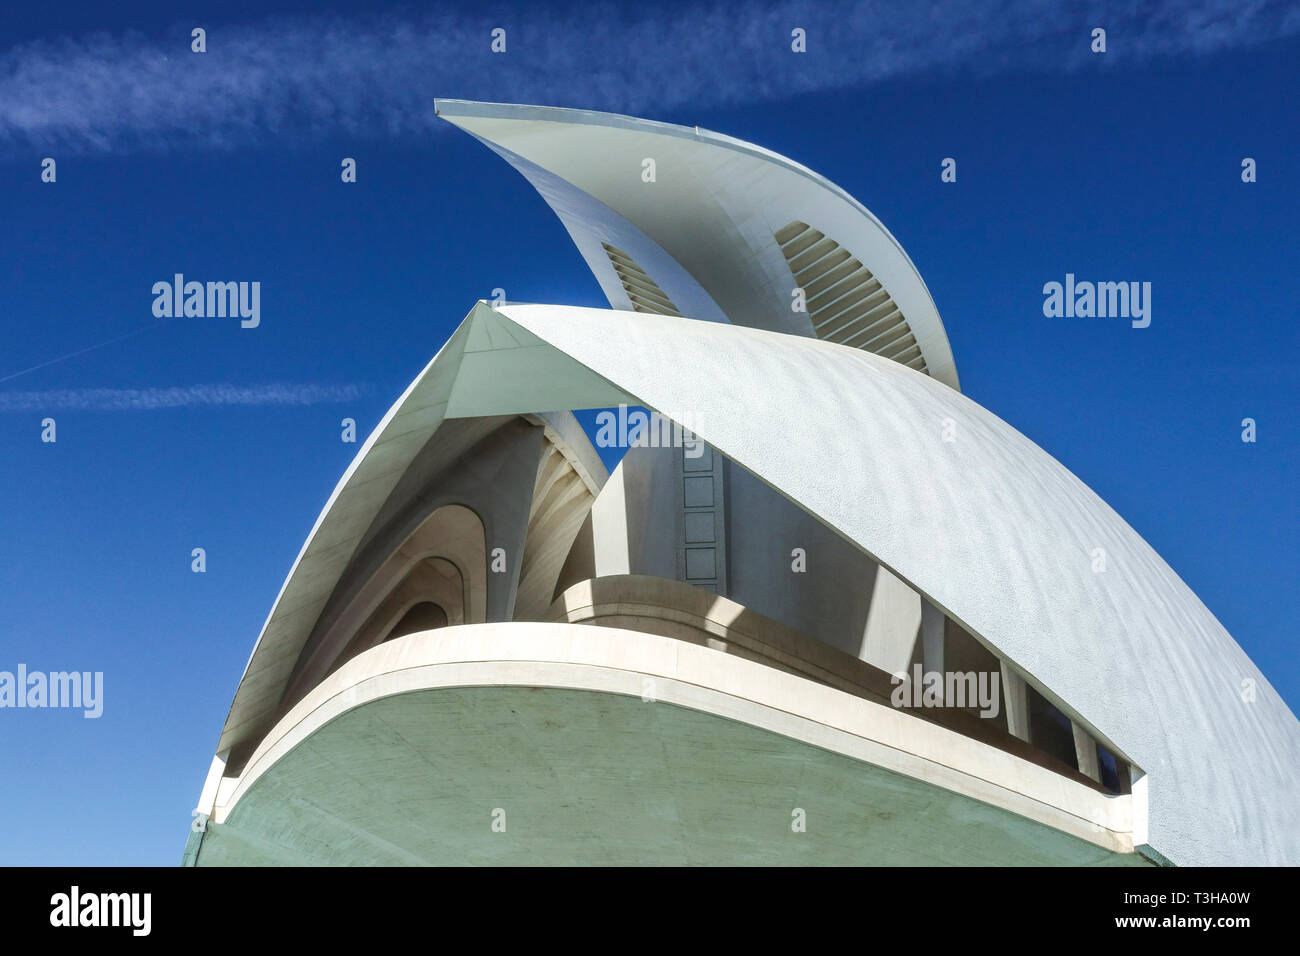 Valencia Spanien City Europe, Valencia City of Arts and Sciences, Opera House - Moderne Architektur von Calatrava El Palau de les Arts Reina Sofia Stockfoto